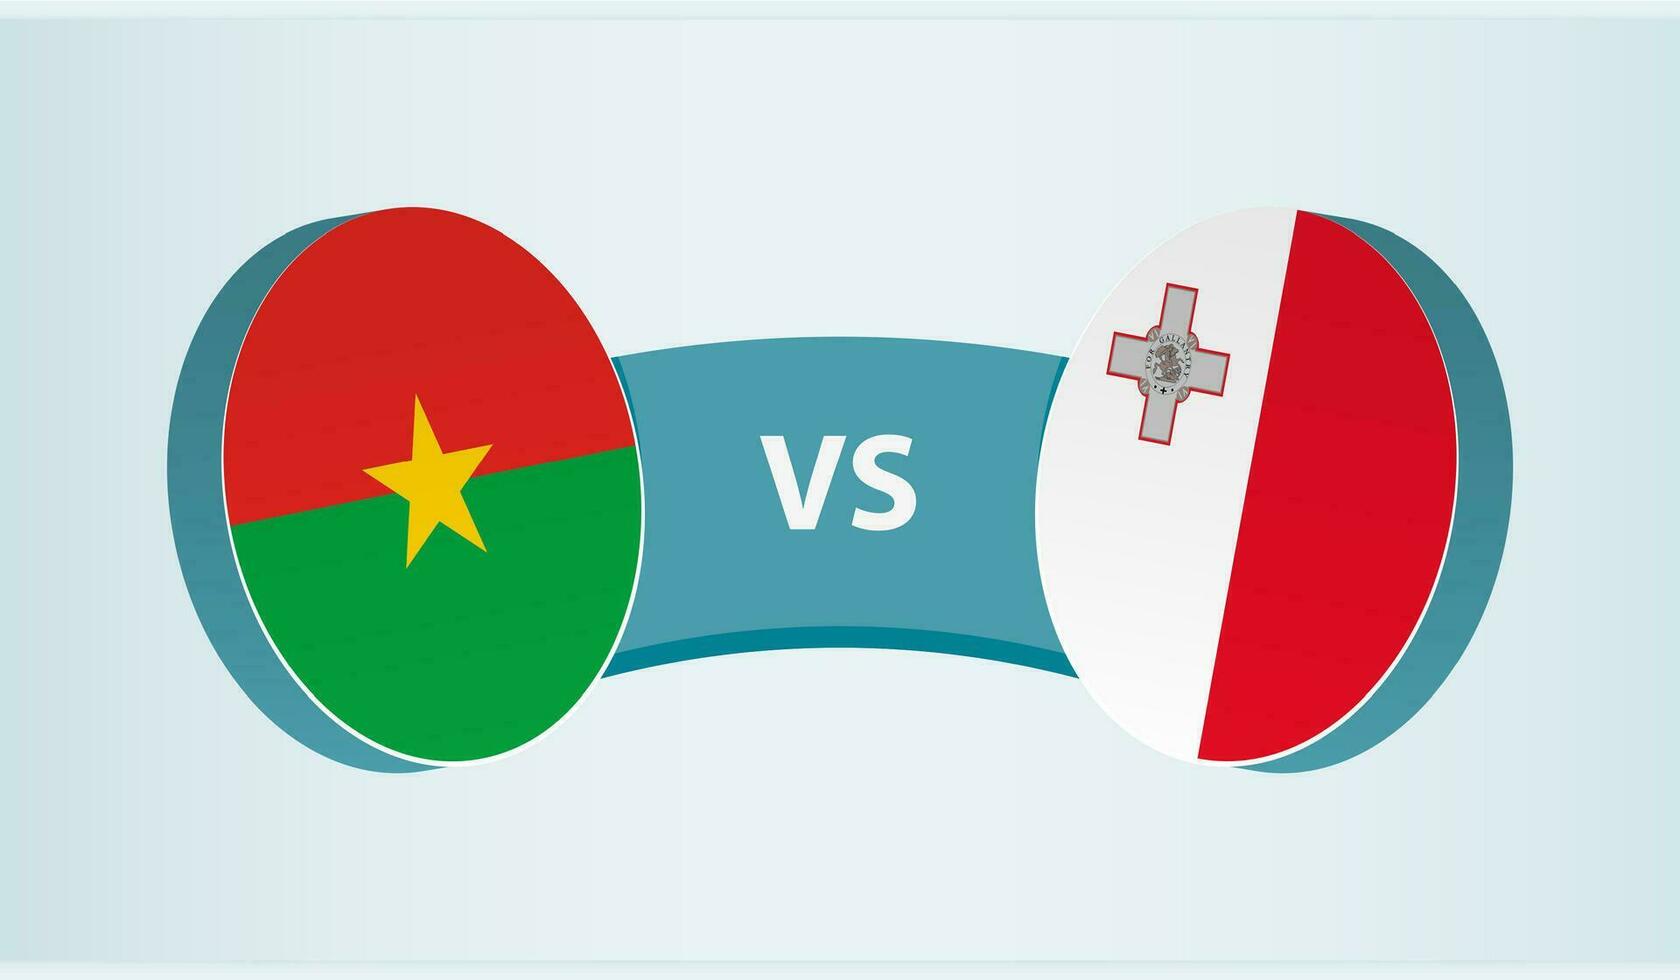 Burkina Faso versus Malta, team sports competition concept. vector